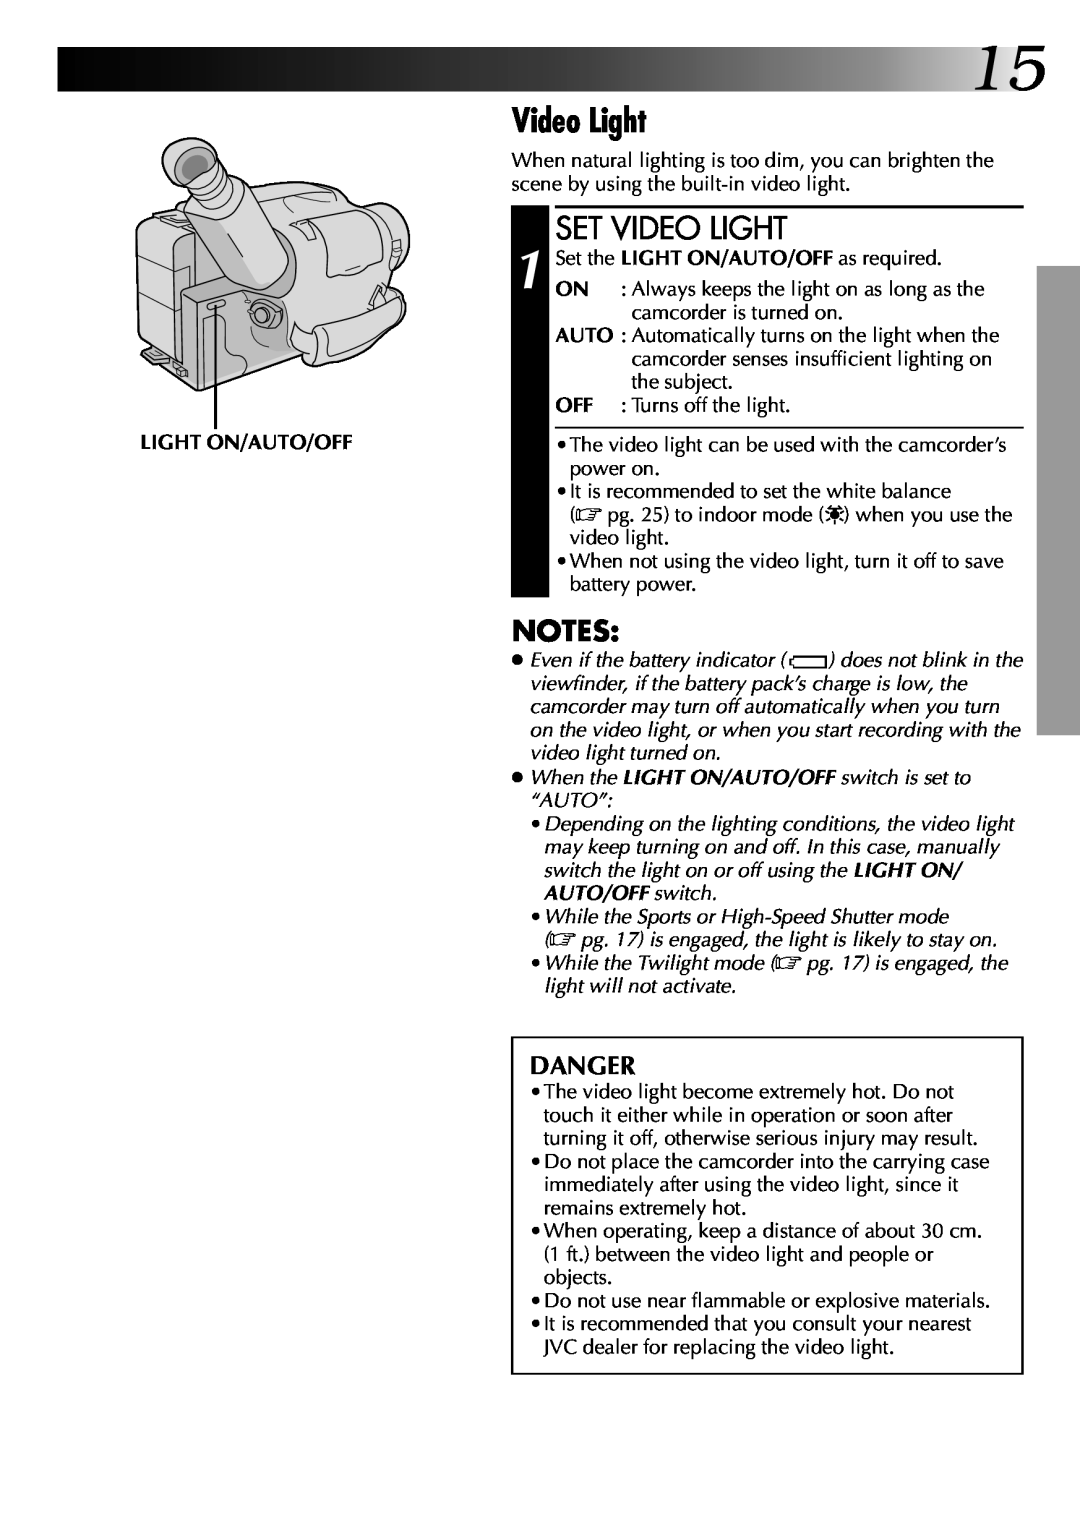 JVC LYT0002-048A specifications Set Video Light, Danger, Light On/Auto/Off 